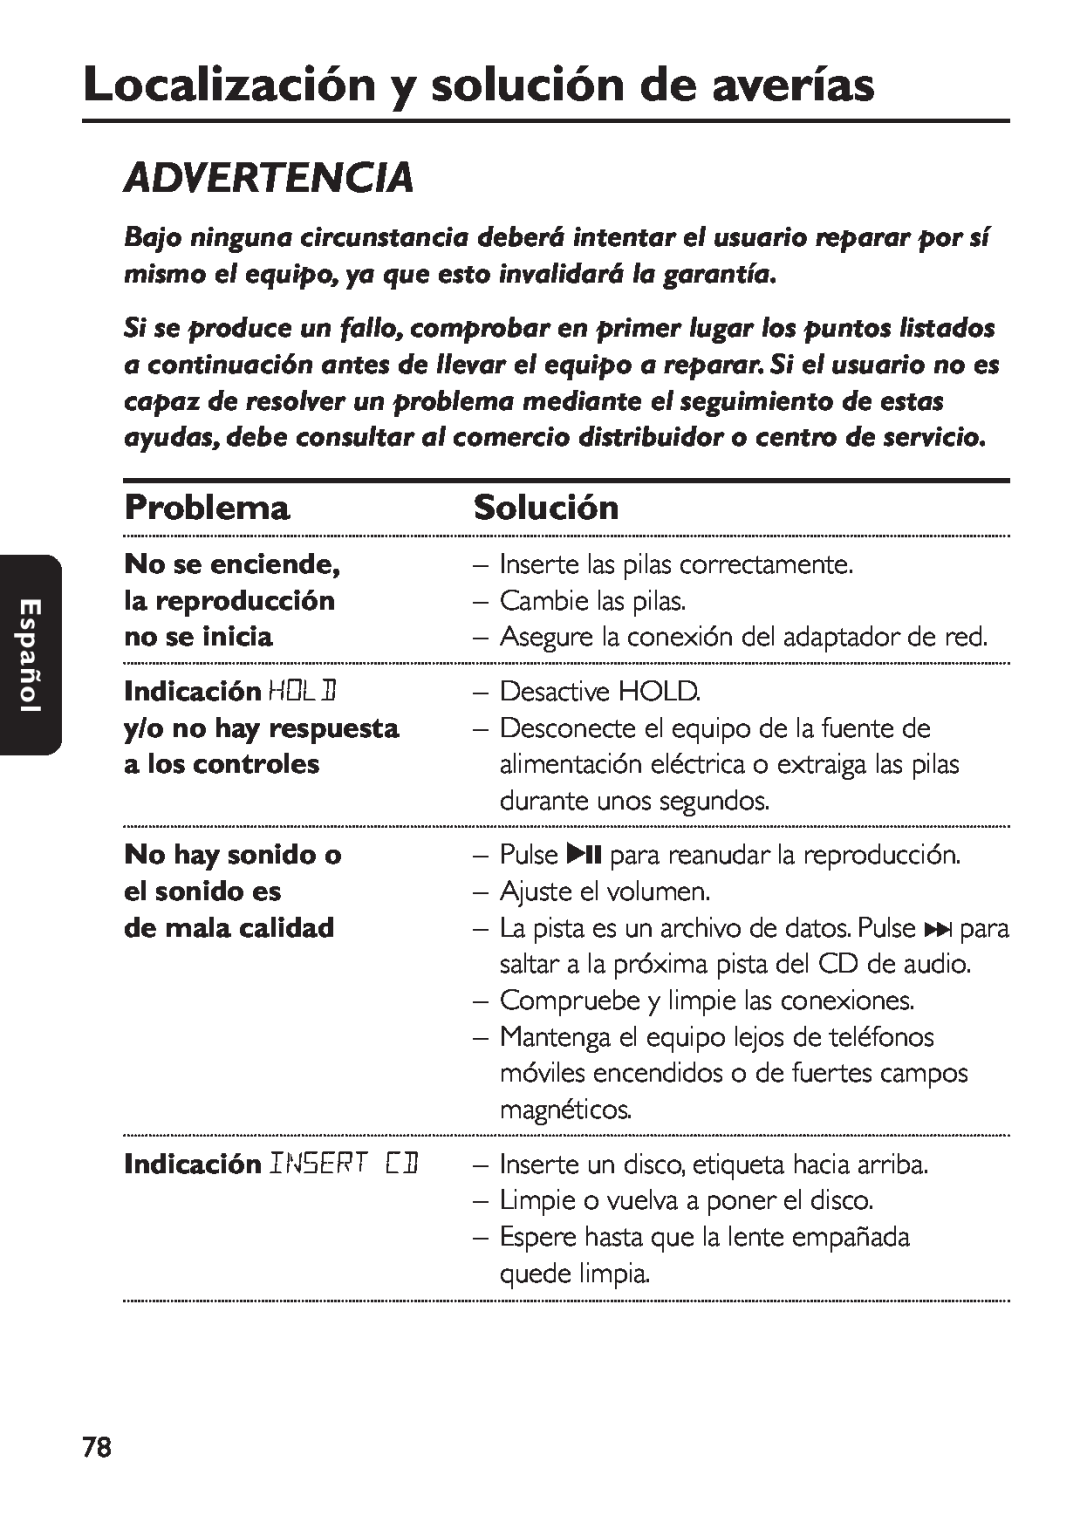 Philips EXP 501/00 manual Localización y solución de averías, Advertencia, Problema, Solución, Indicación HOLD, Español 